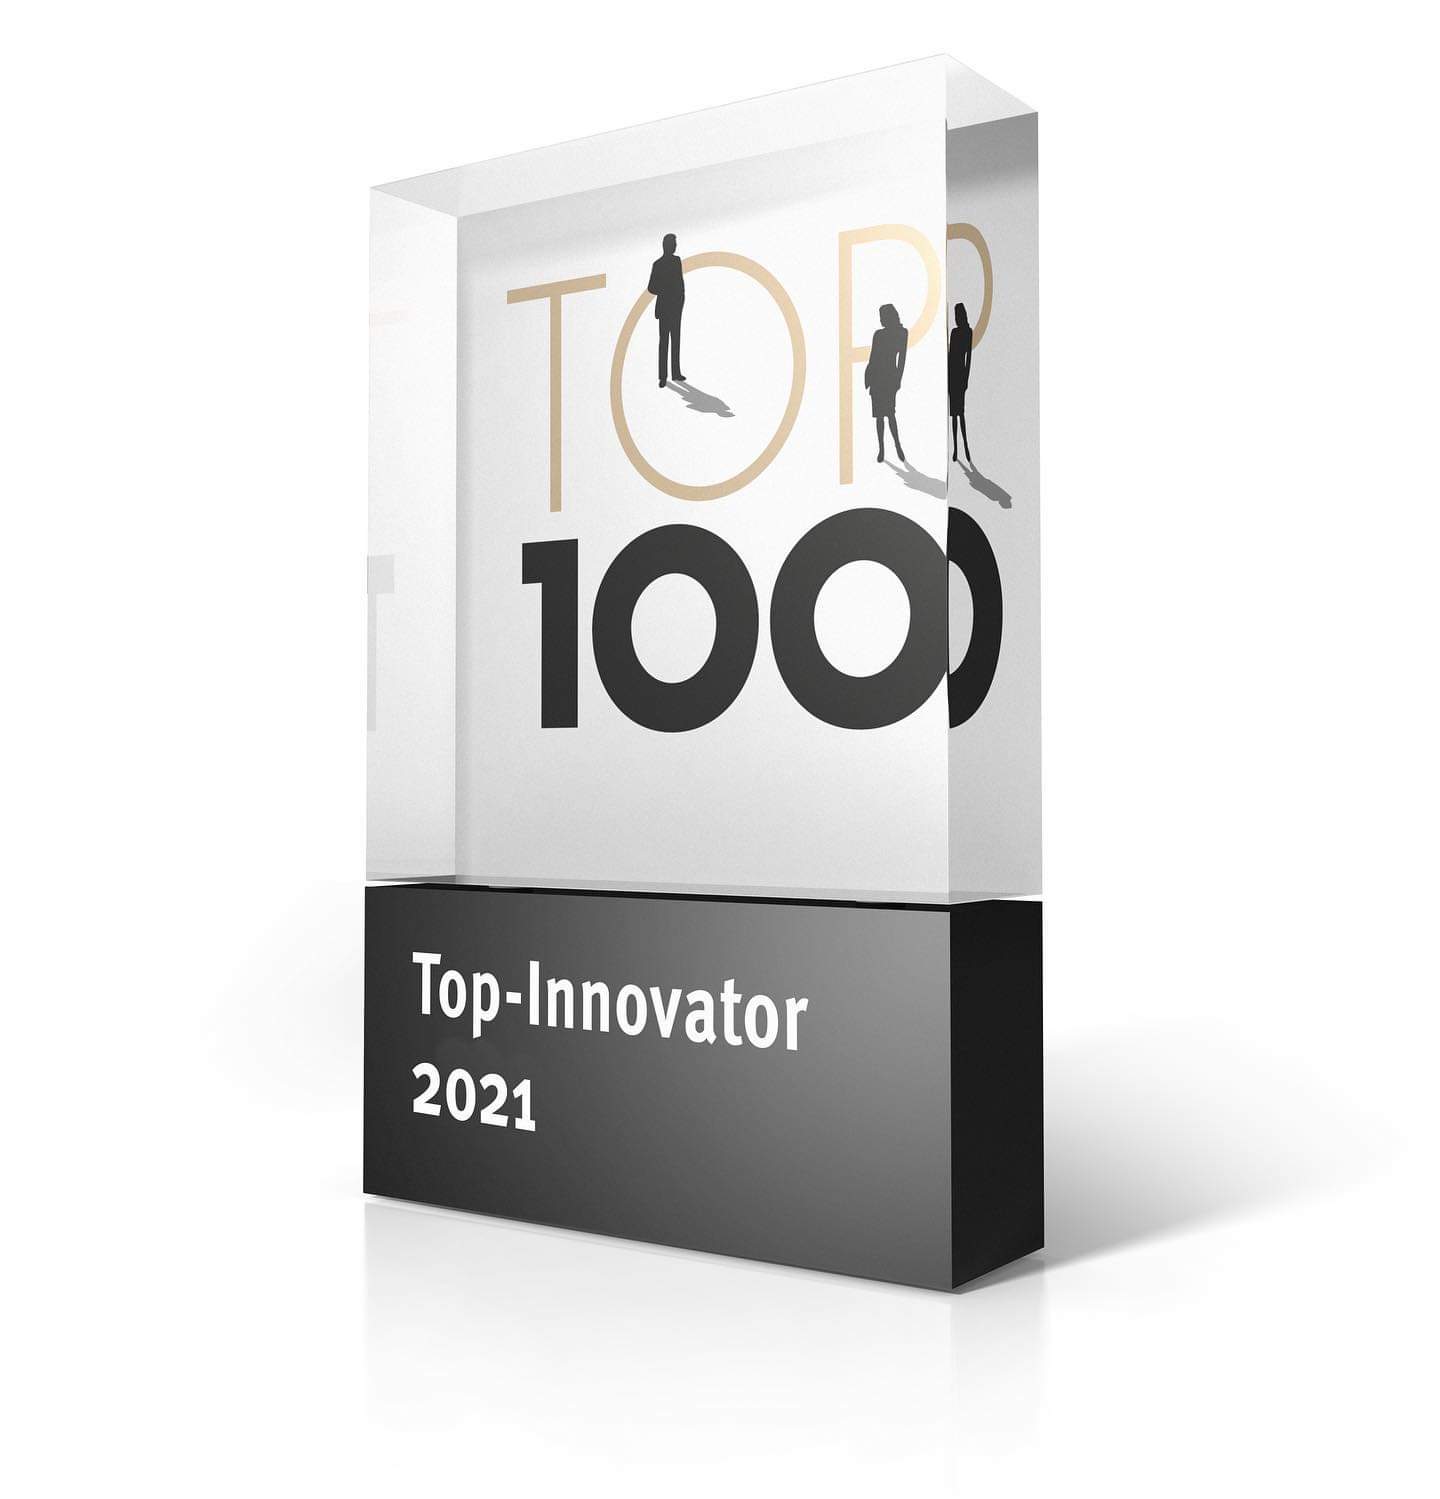 Top-Innovator 2021